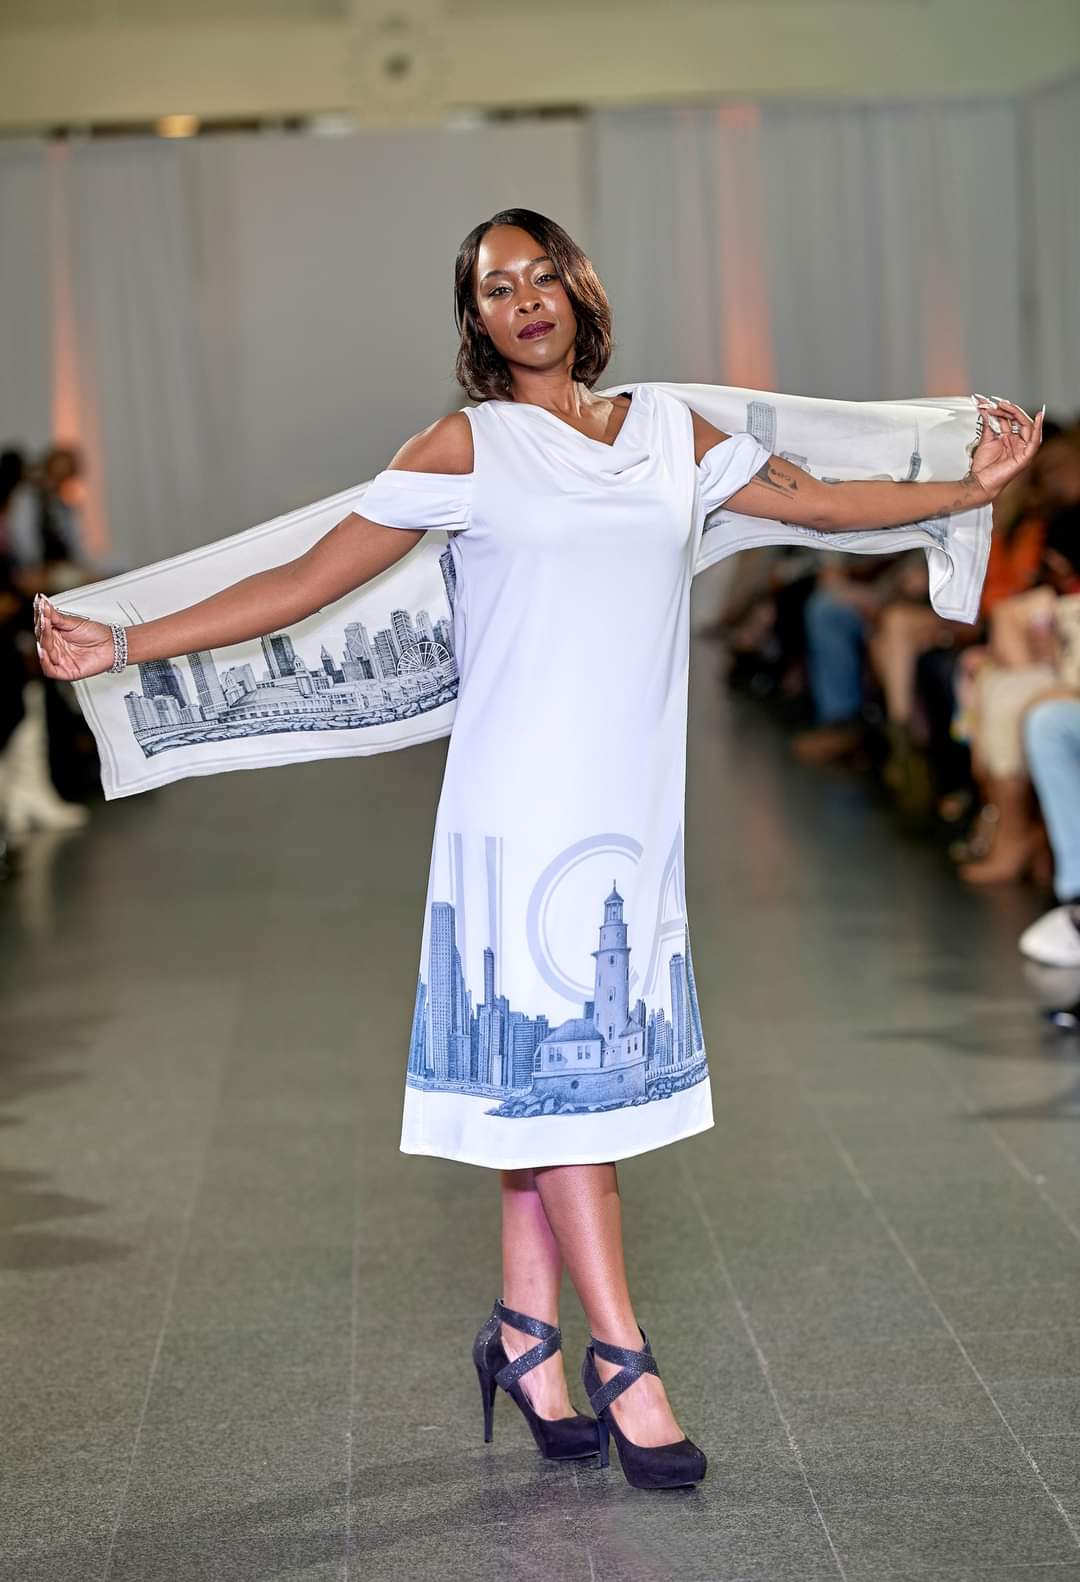 Chicago Skyline Art Dress by Alesia Chaika Wearable Art  Custom City Dress